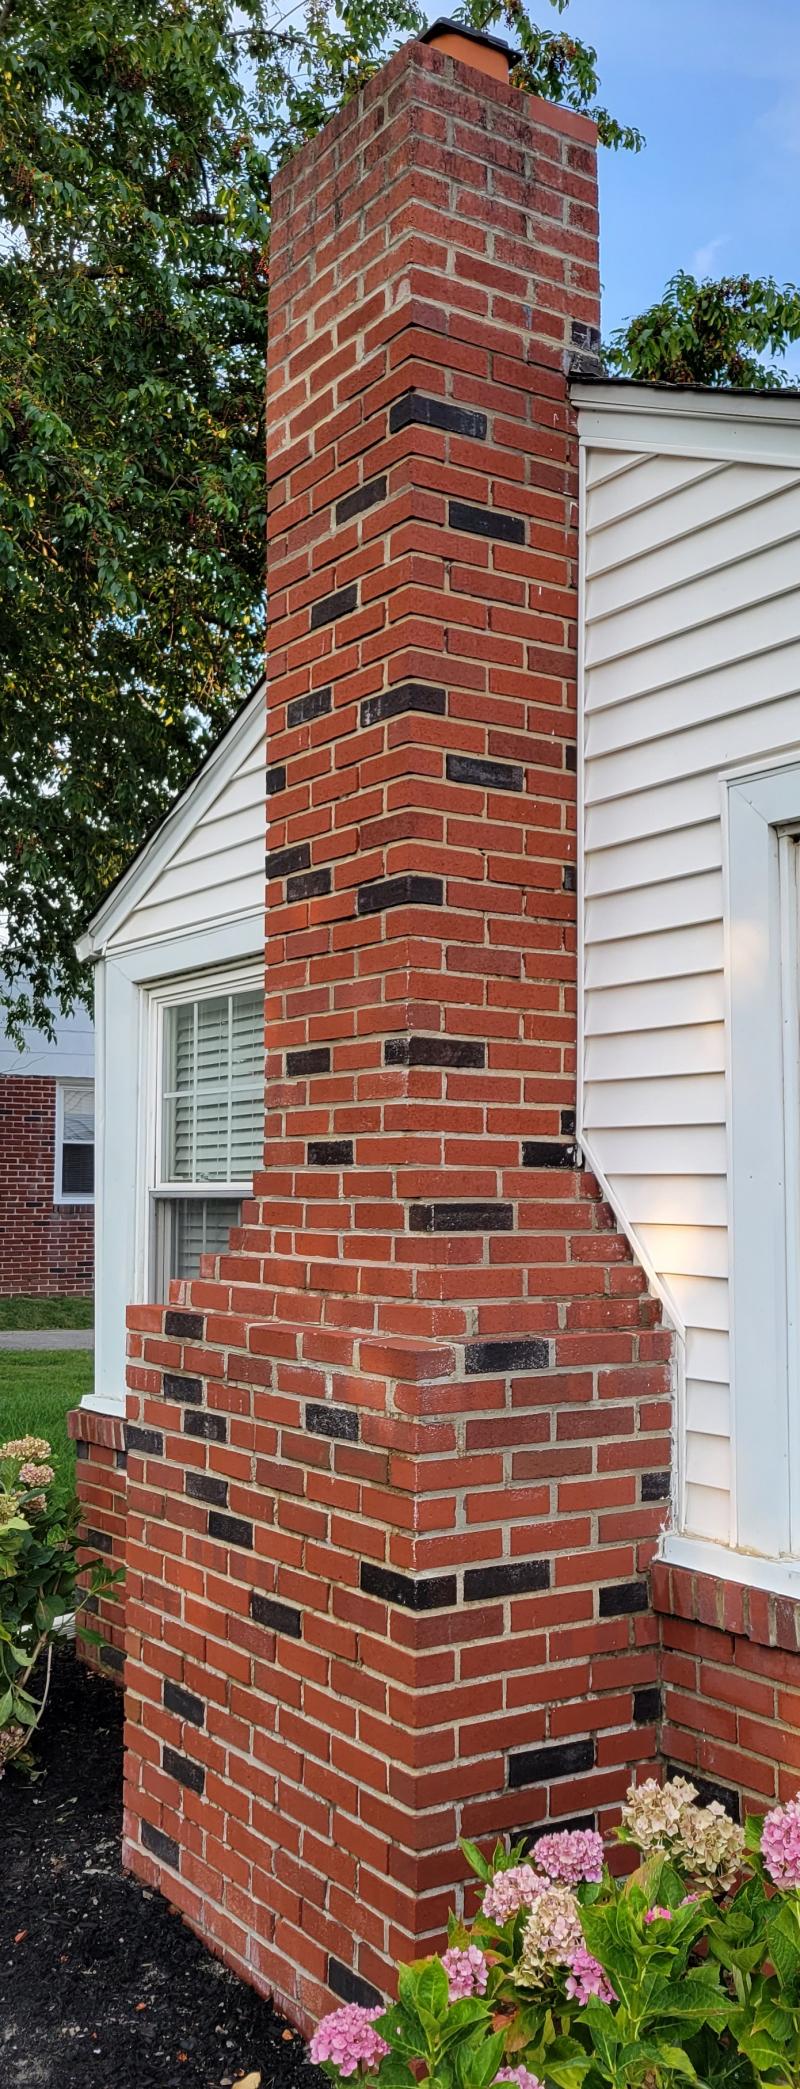 Brick Chimney Repairs and Repointing